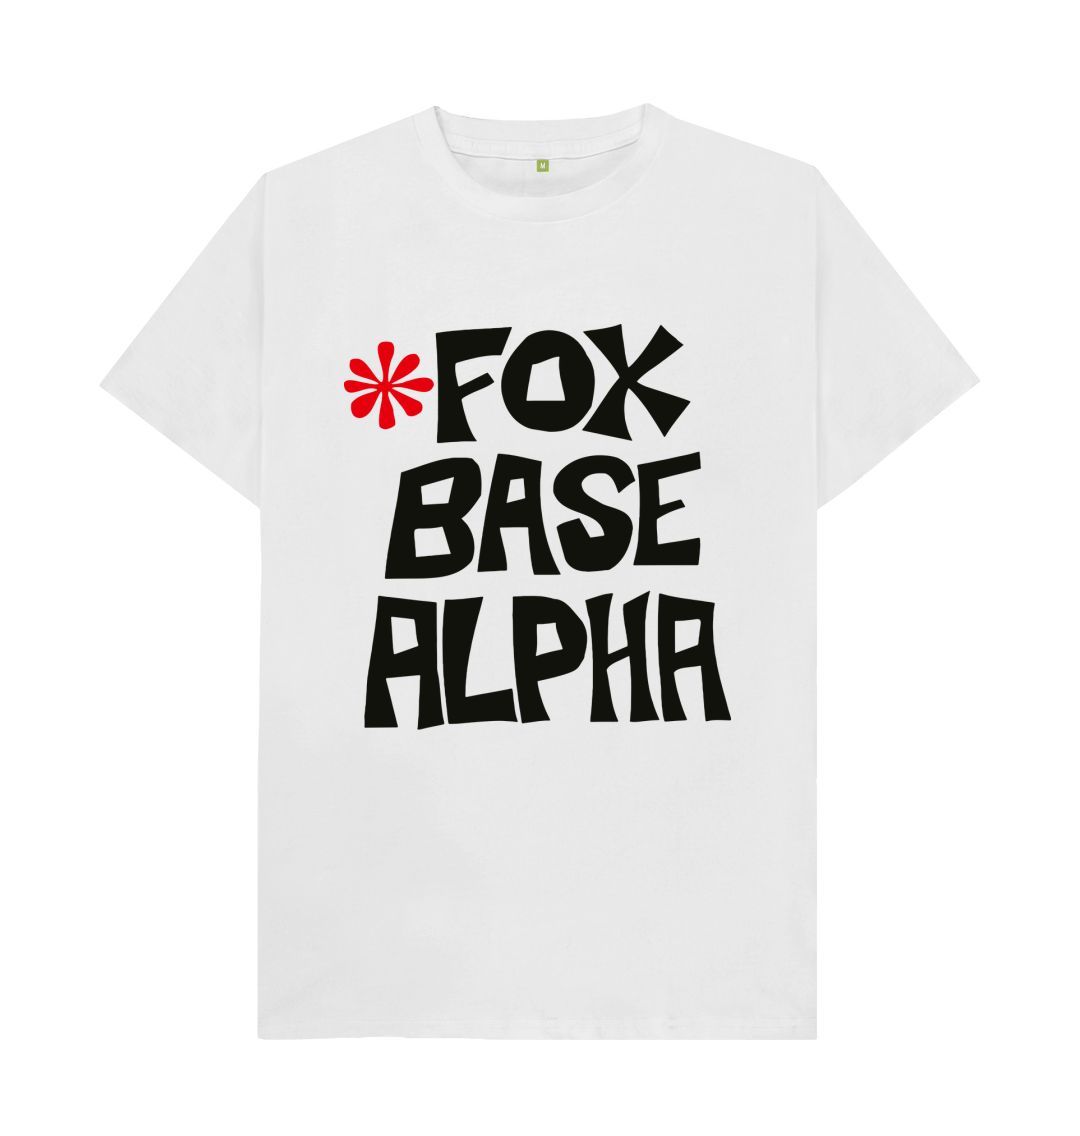 White Fox Base Alpha t-shirt